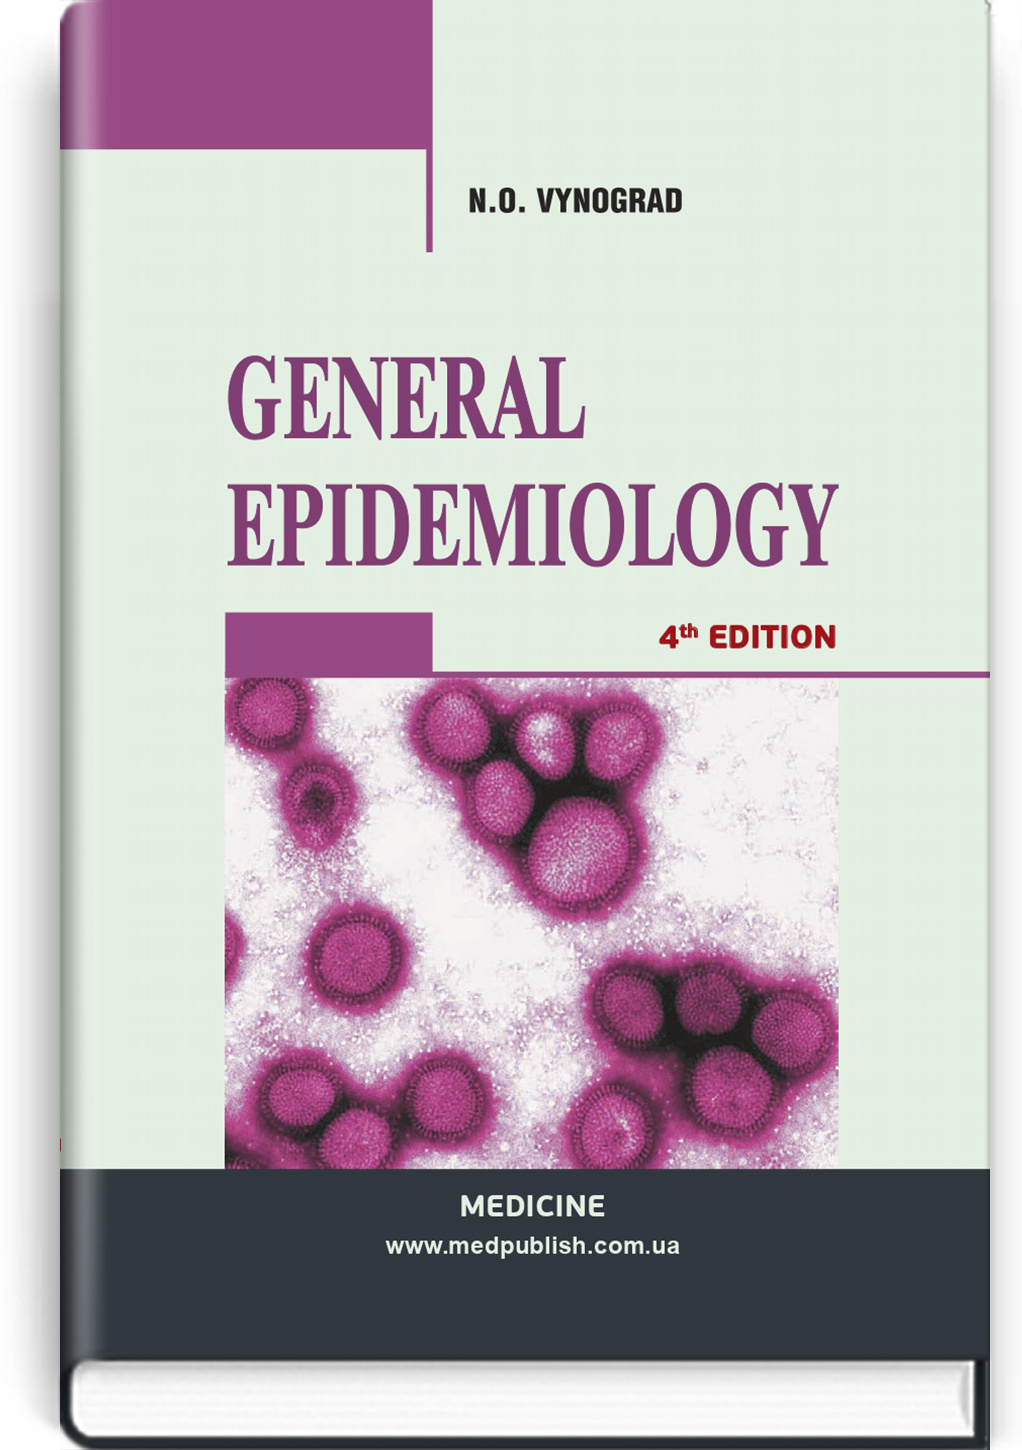 General epidemiology: study guide. Автор — N.O. Vynograd. 